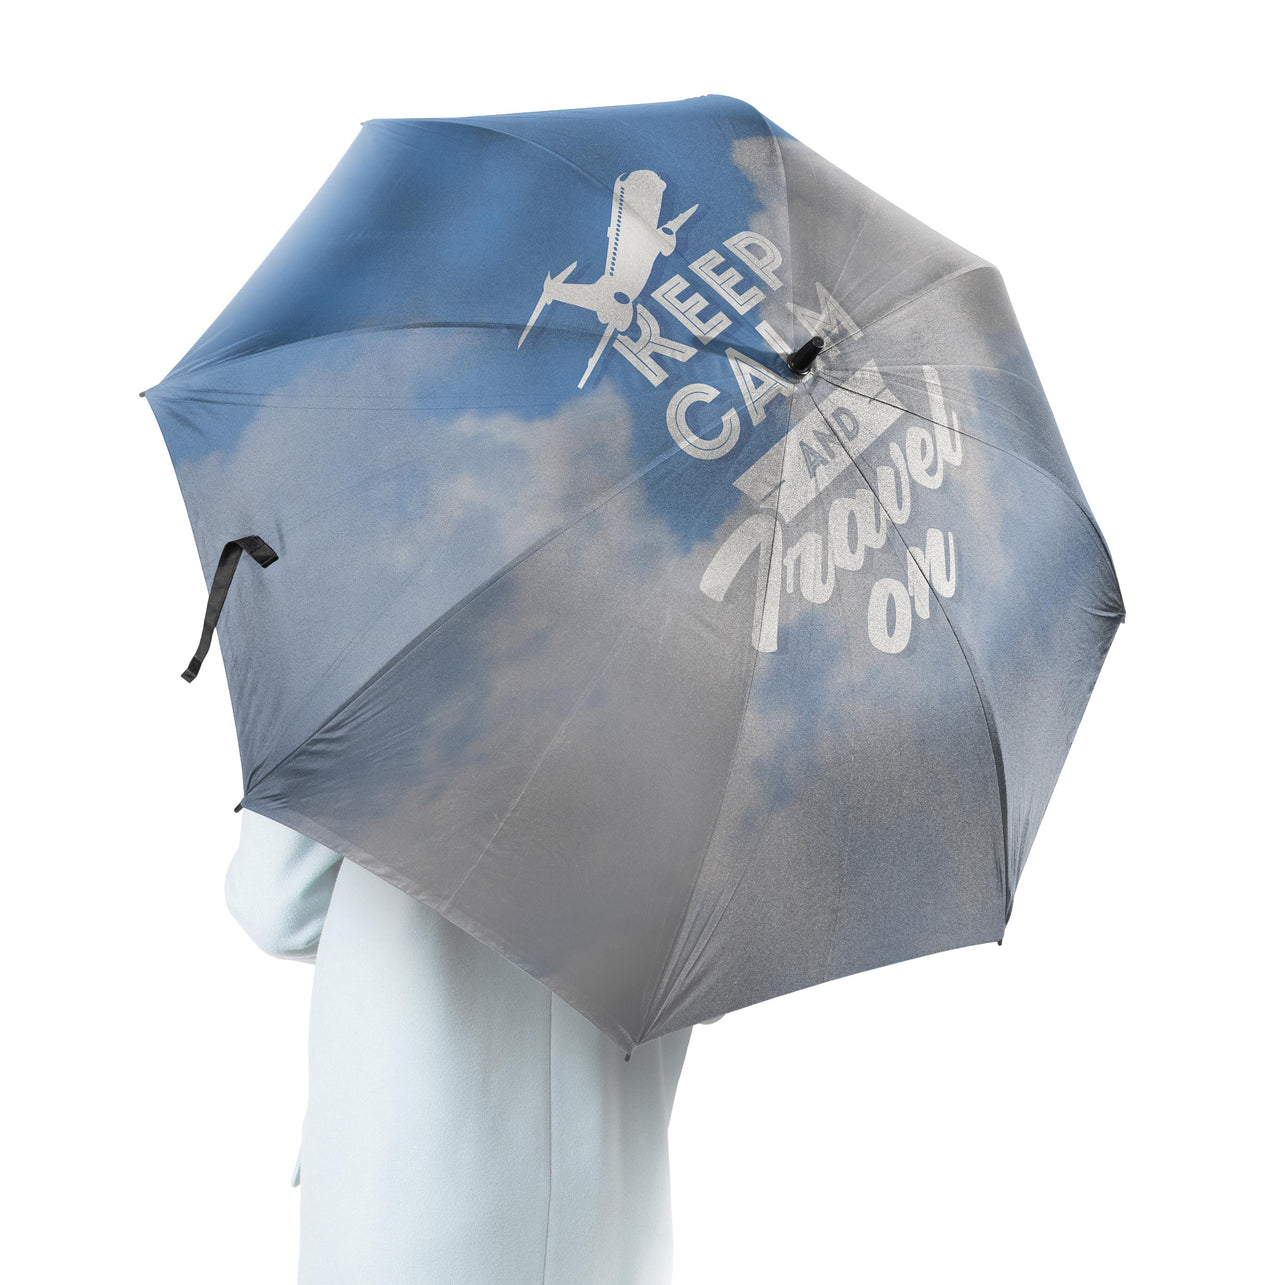 Keep Calm and Travel On Designed Umbrella